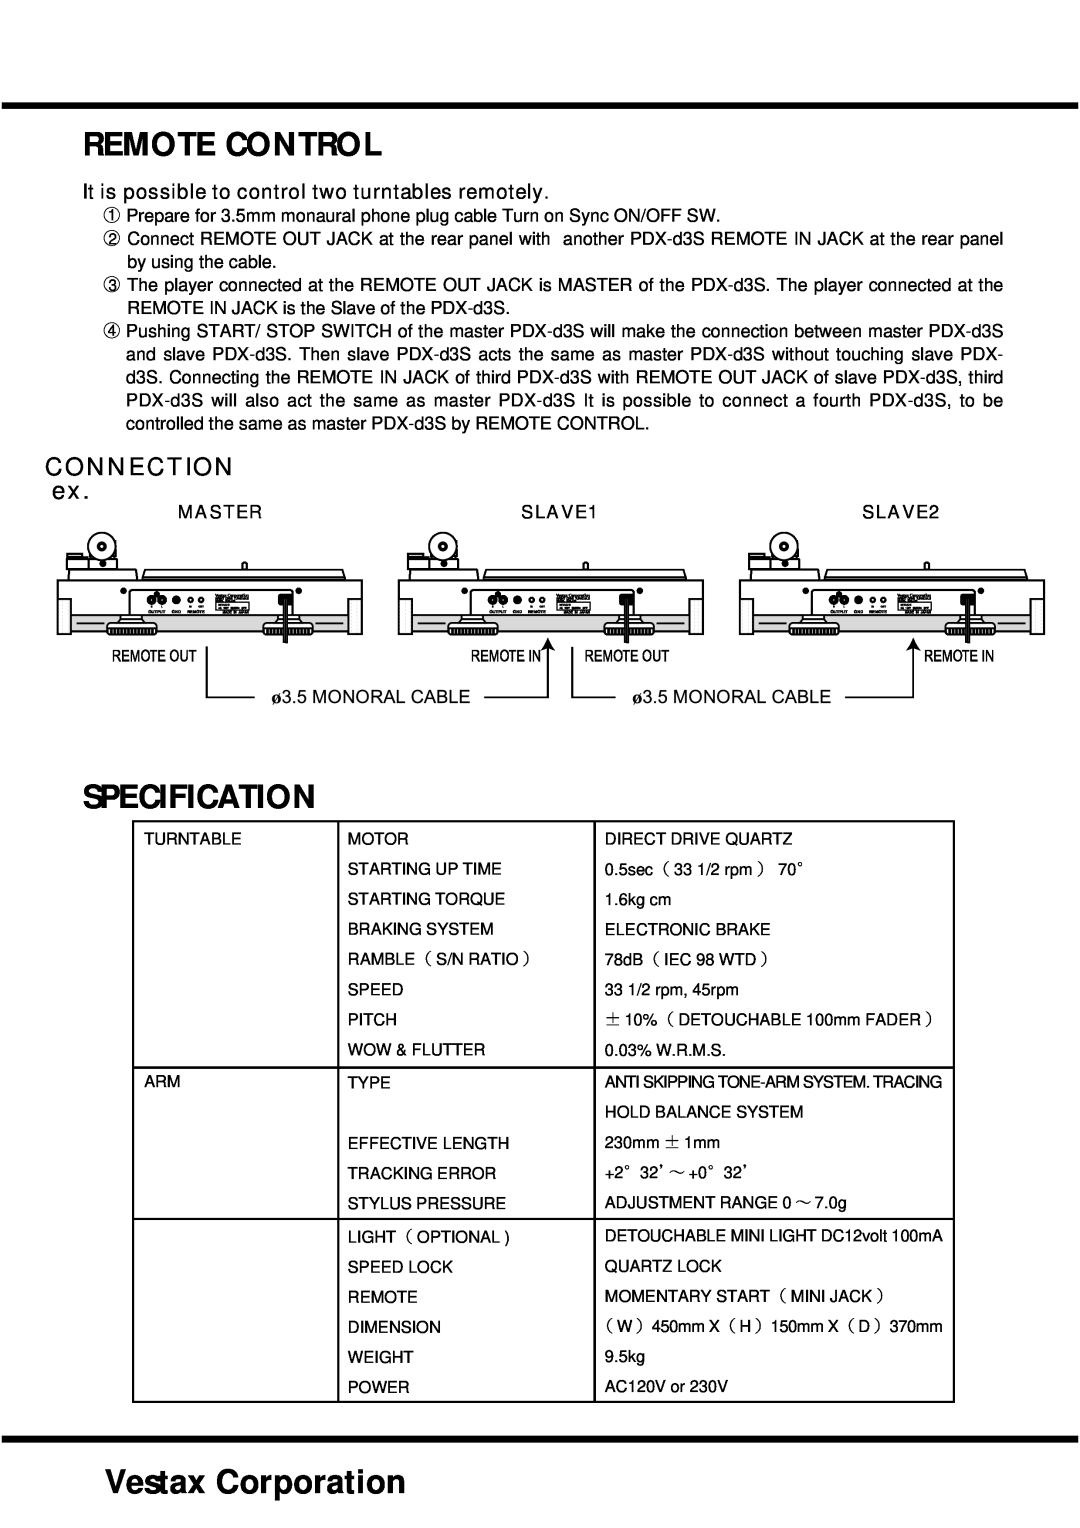 Vestax PDX-d3S owner manual Vestax Corporation, Remote Control, Specification, CONNECTION ex 